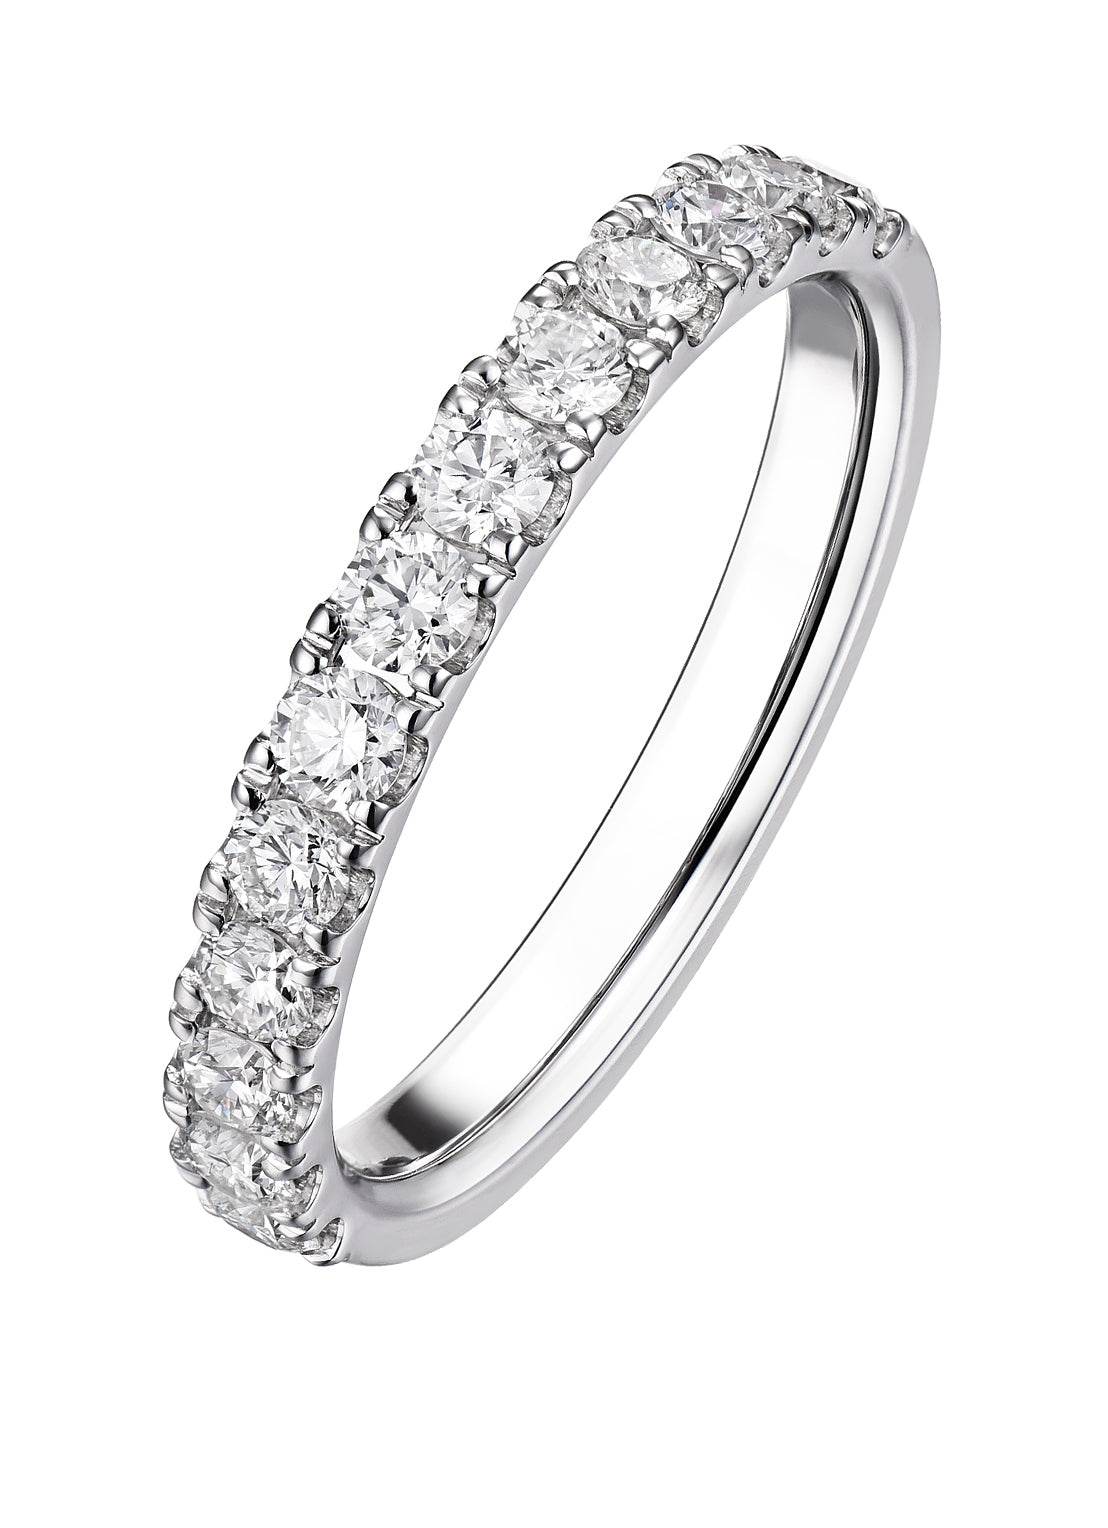 White gold ring, 0.76 ct diamond, wedding